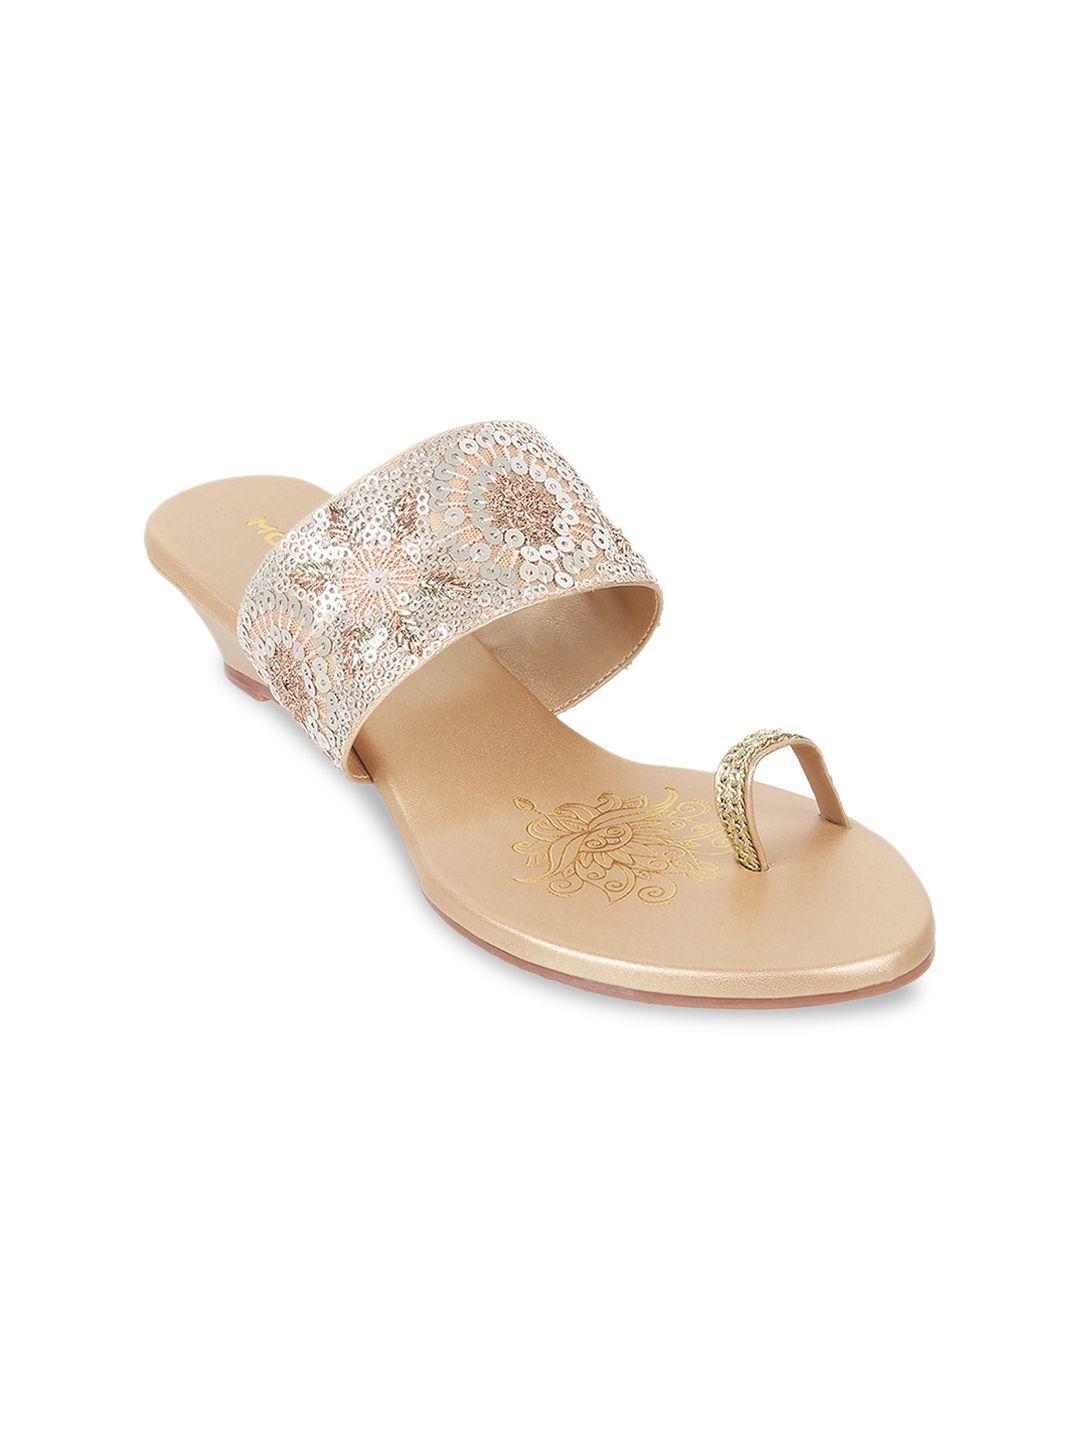 mochi-sequin-embellished-one-toe-wedge-heels